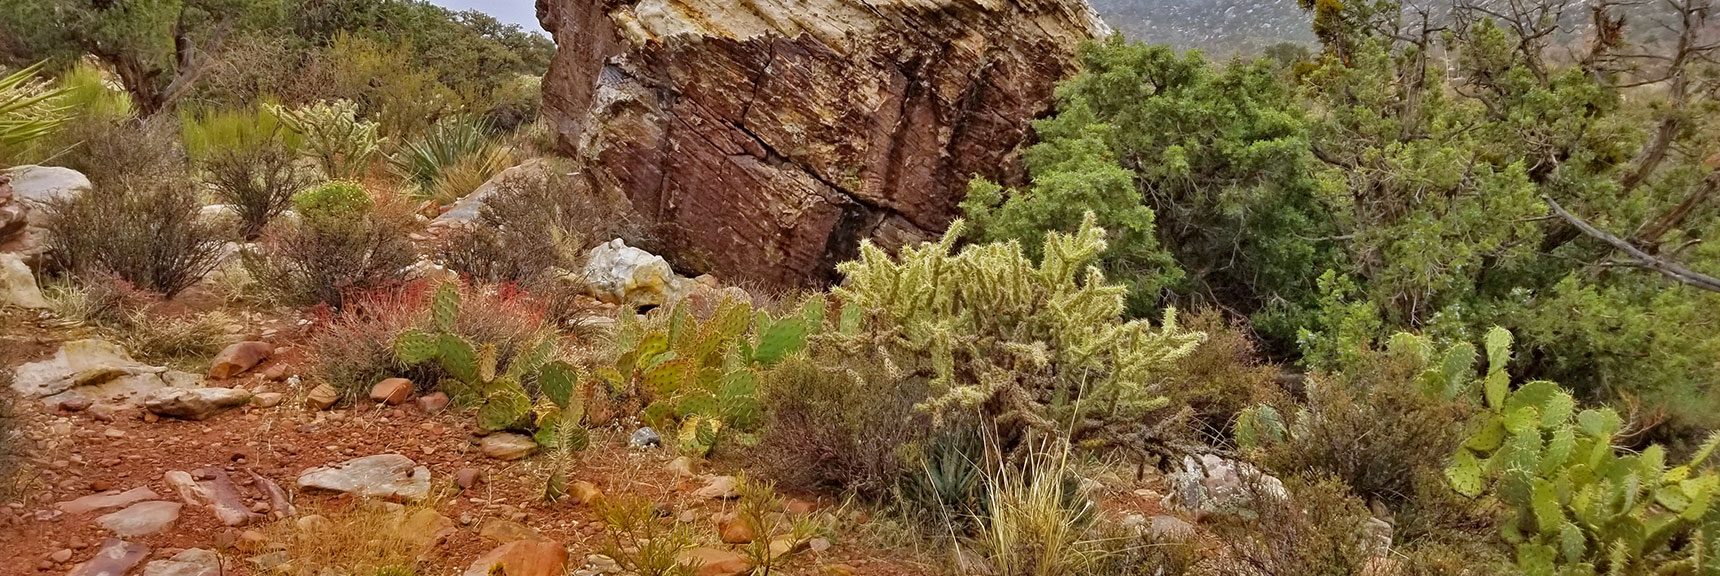 Cactus Garden On White Rock Mountain Loop in Red Rock Park, Nevada